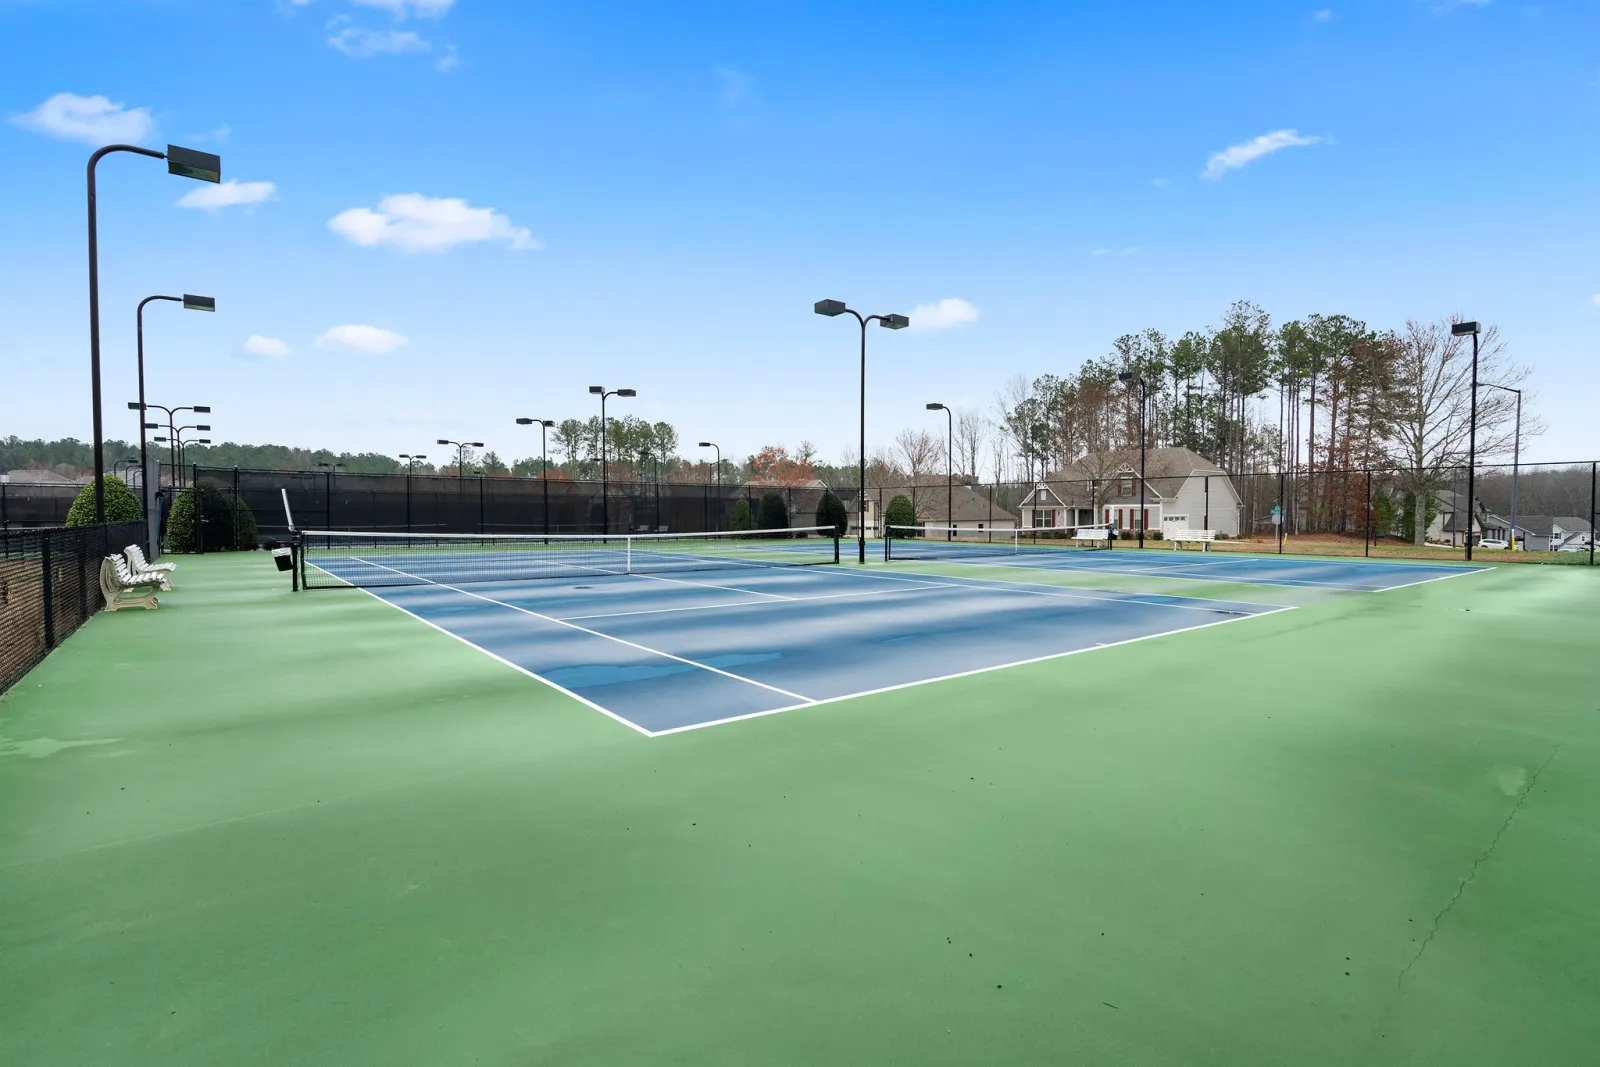 a tennis court with a blue court